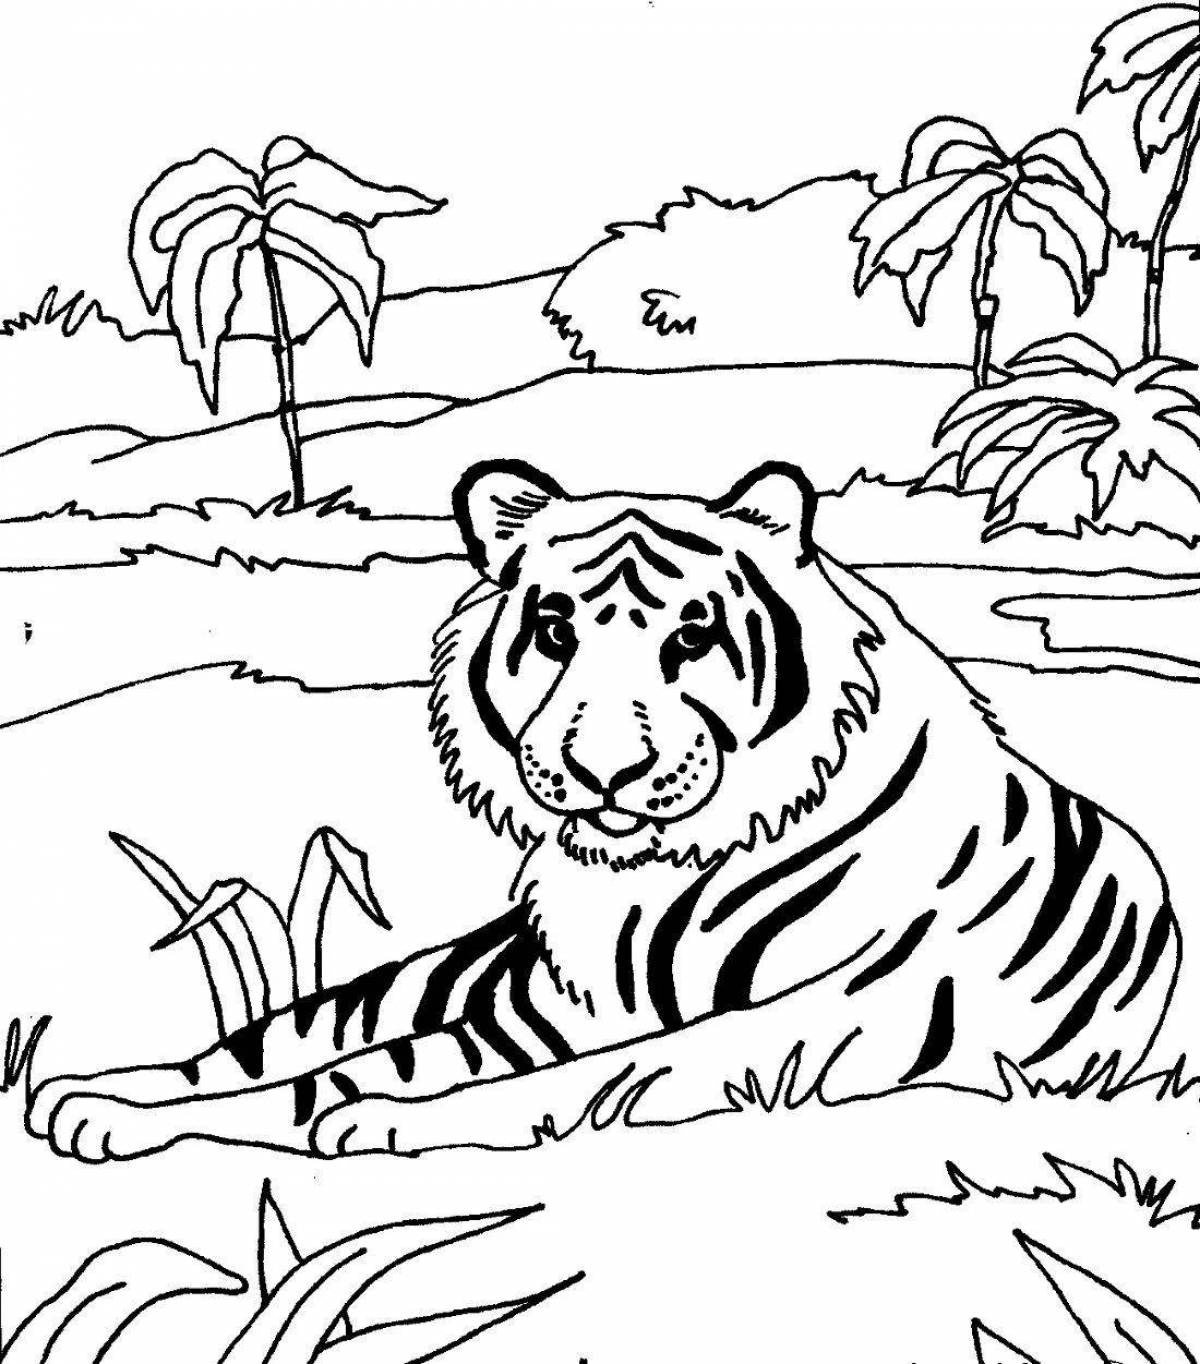 Brilliant red siberian tiger coloring book